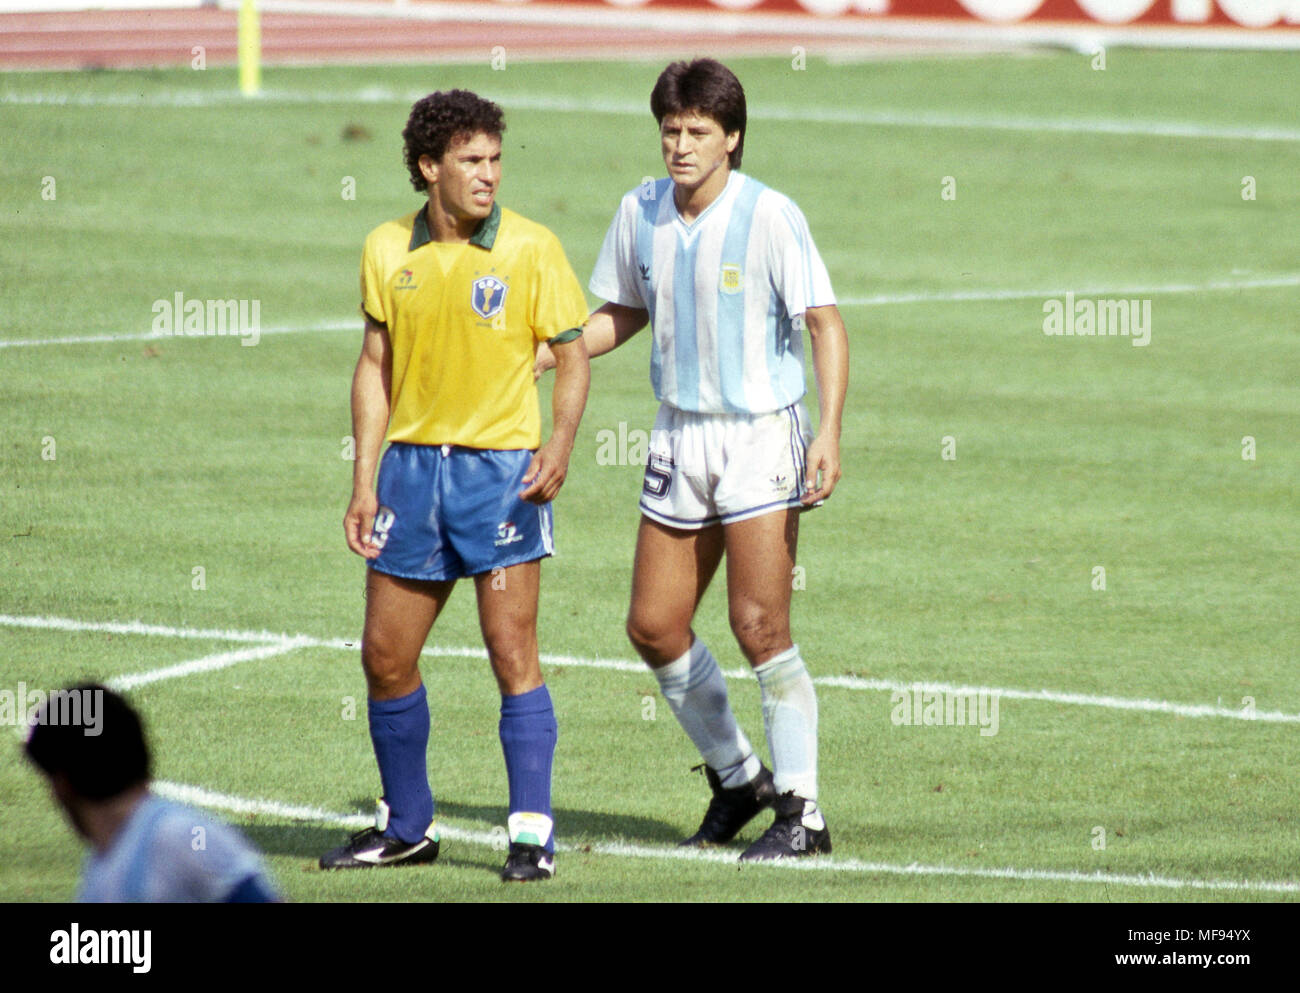 Paladar Negro on X: Italia 1990 - World Cup Italia´90